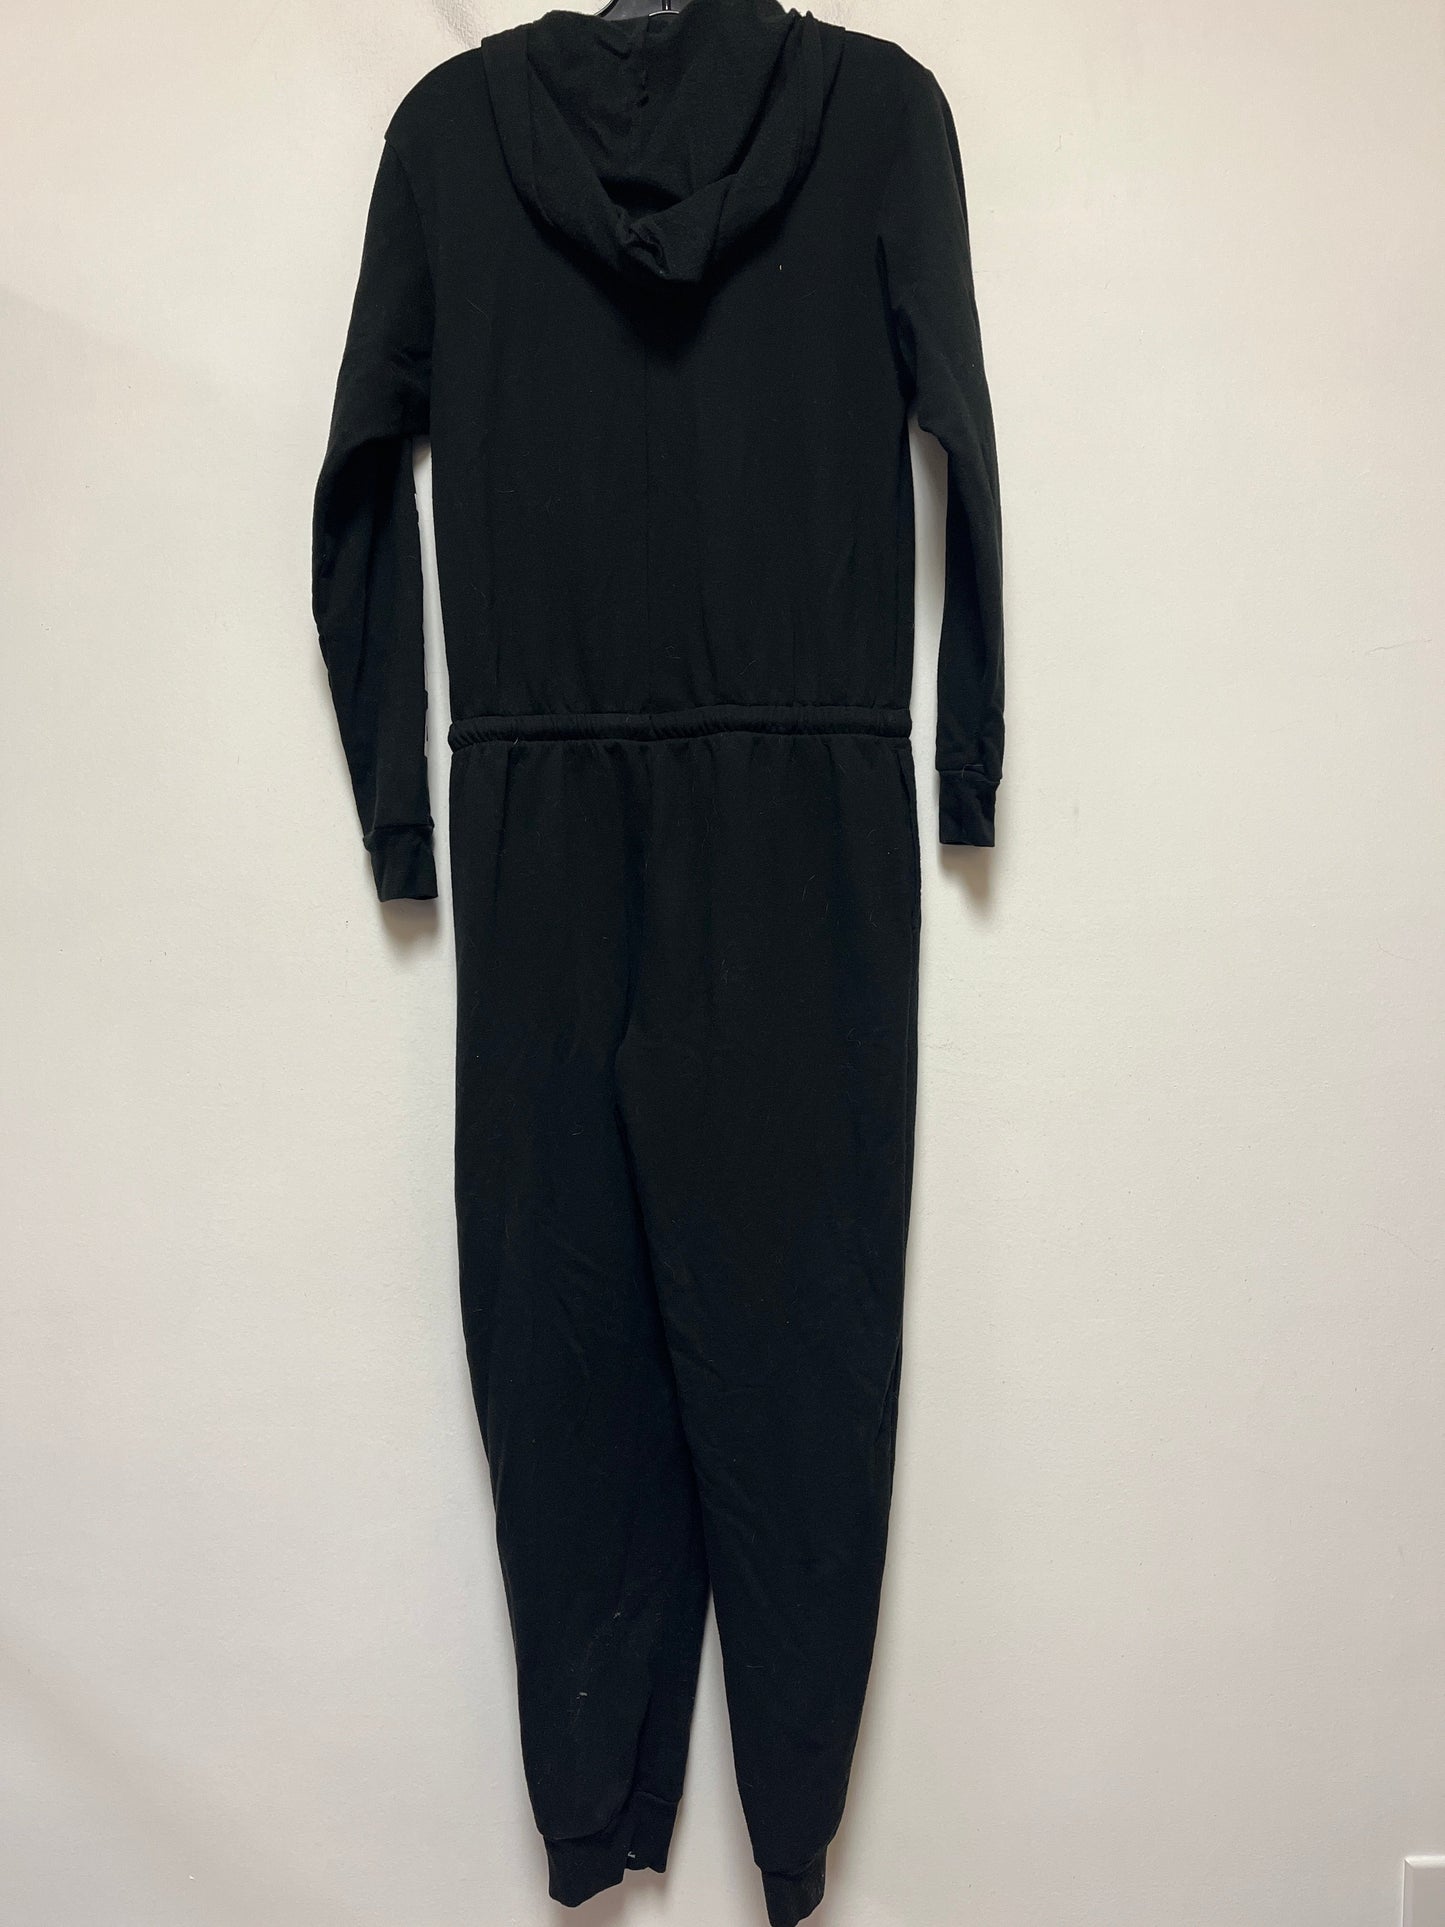 Black Jumpsuit Discreet Wear, Size S